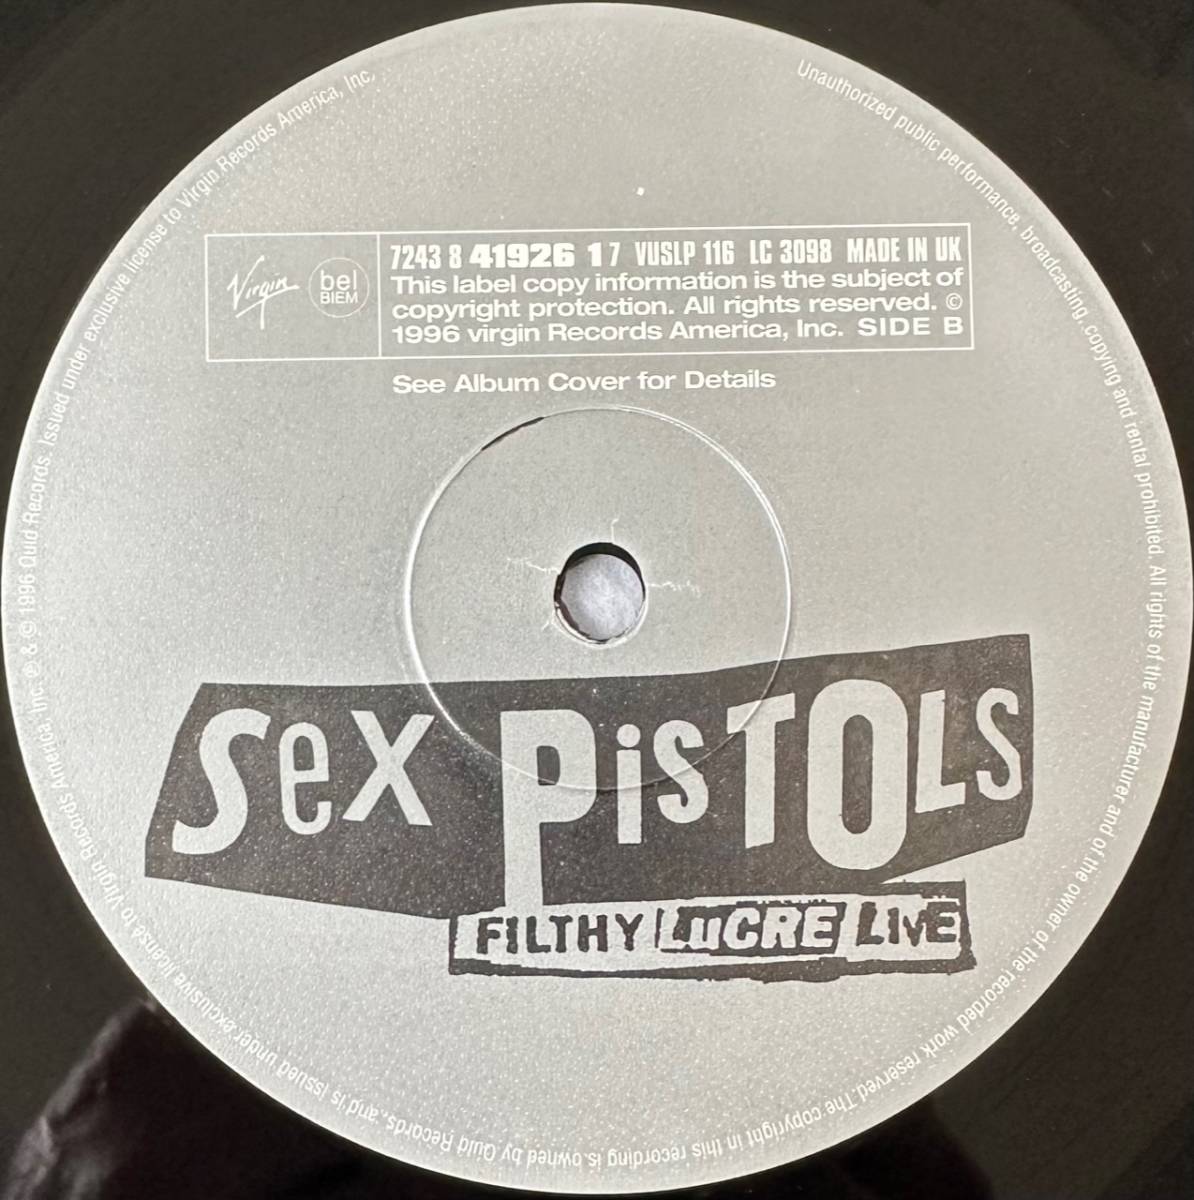 #1996 year original UK record Sex Pistols - Filthy Lucre Live 12~LP 7 24384 19261 7 Virgin Fujiwara hirosiFRAGMENT